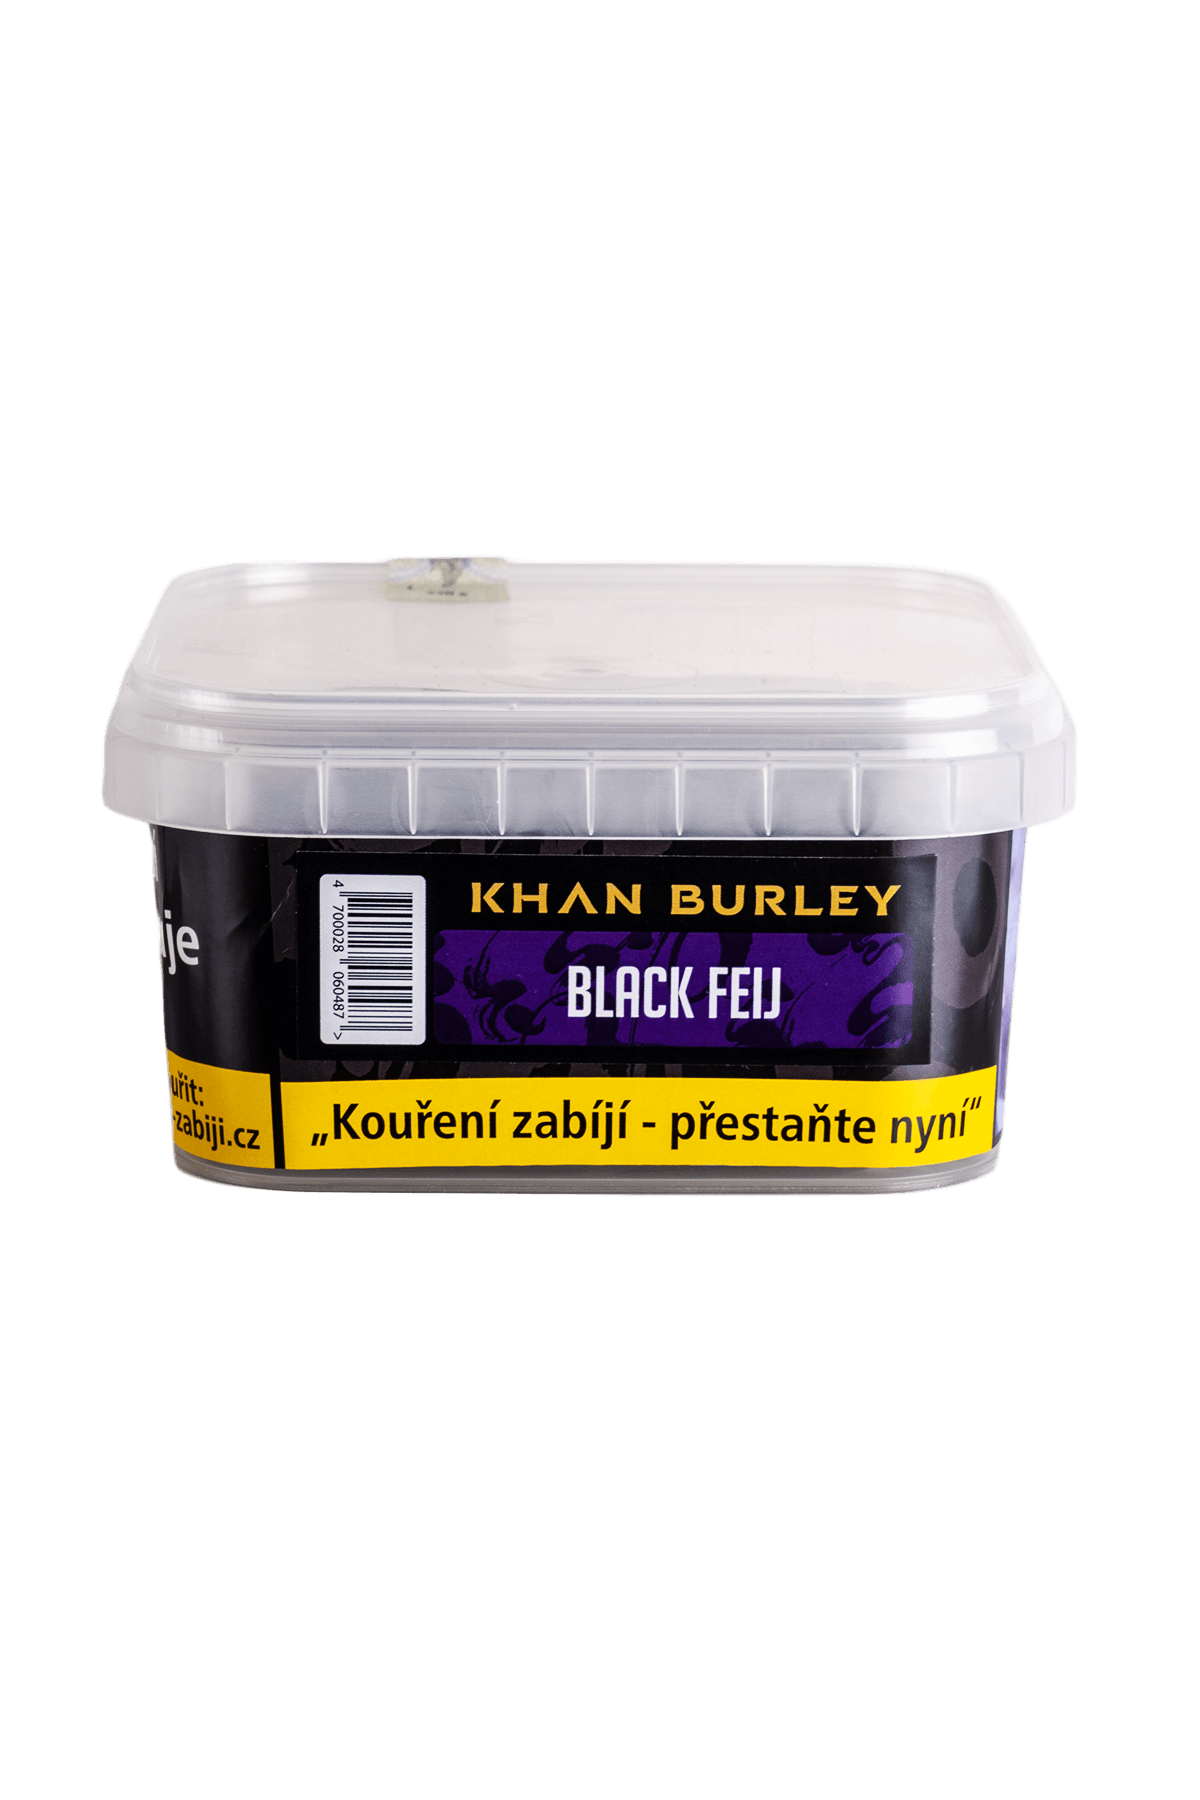 Tabák - Khan Burley 250g - Black Feijoa